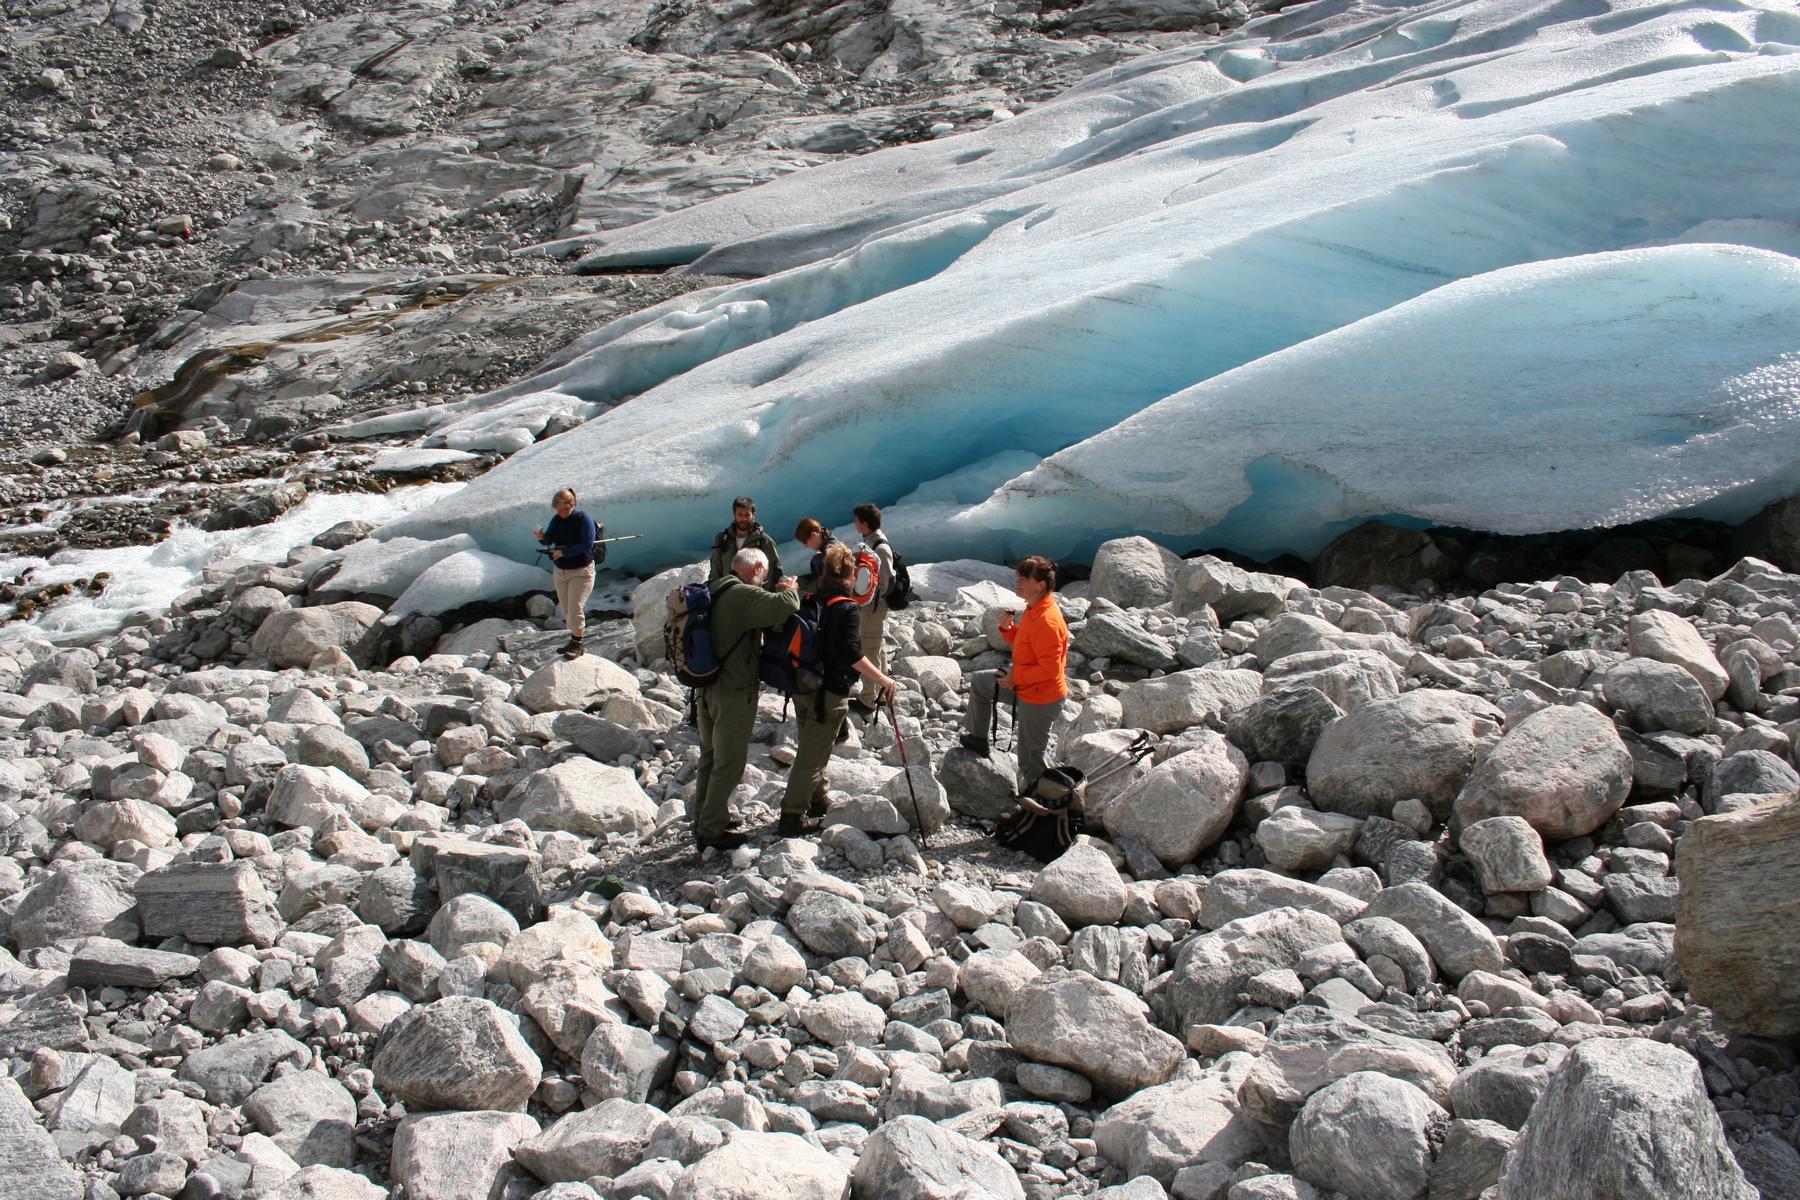 Wanderung entlang der Gletschermassen - Lupe Reisen